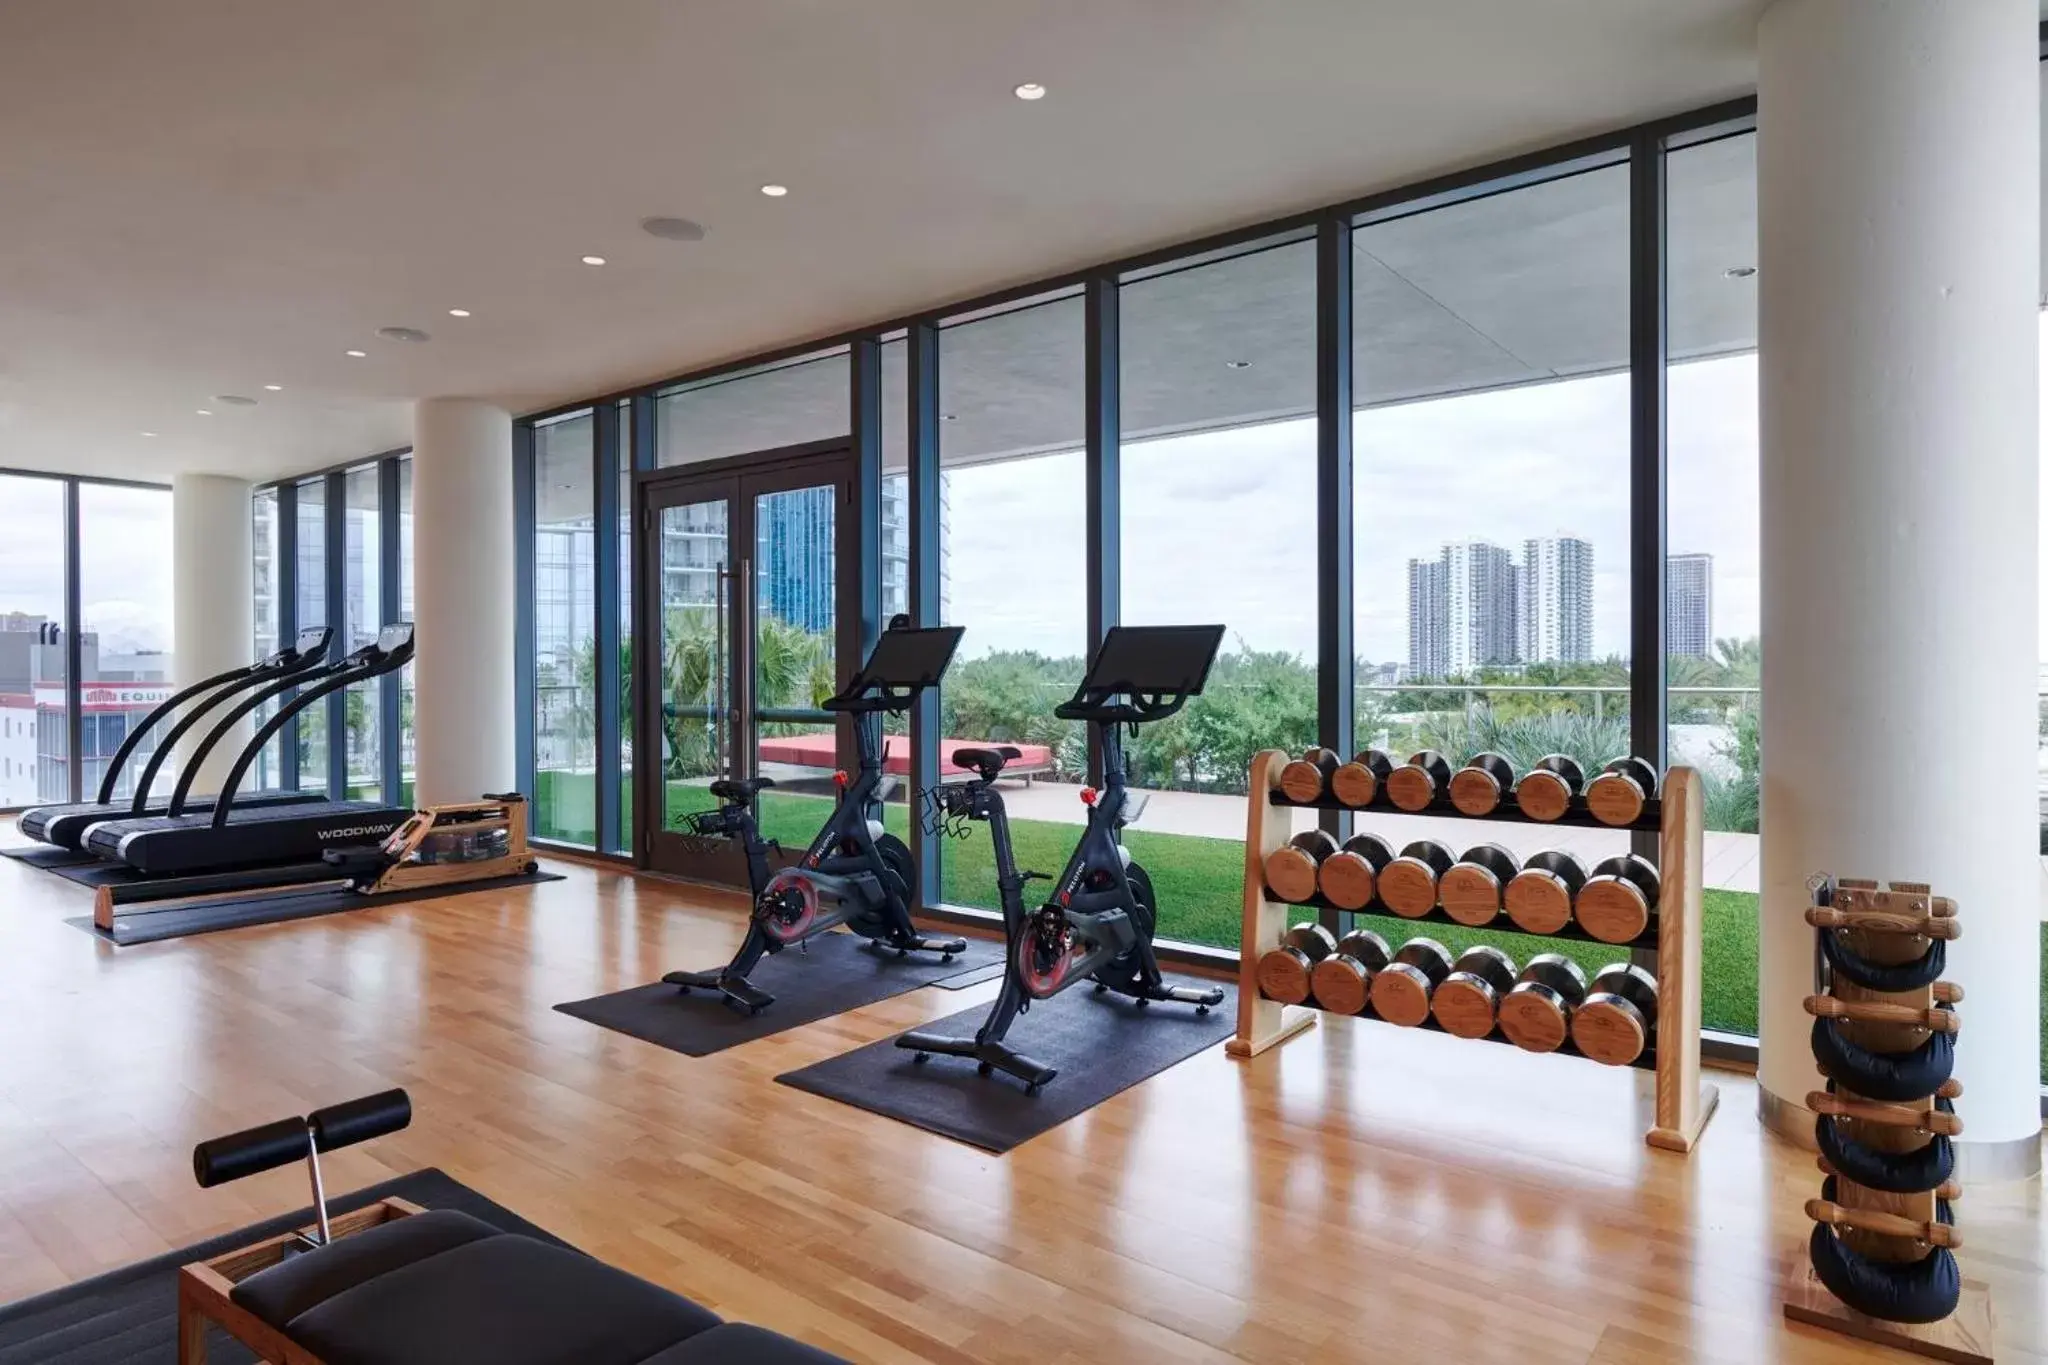 Fitness centre/facilities, Fitness Center/Facilities in citizenM Miami Worldcenter